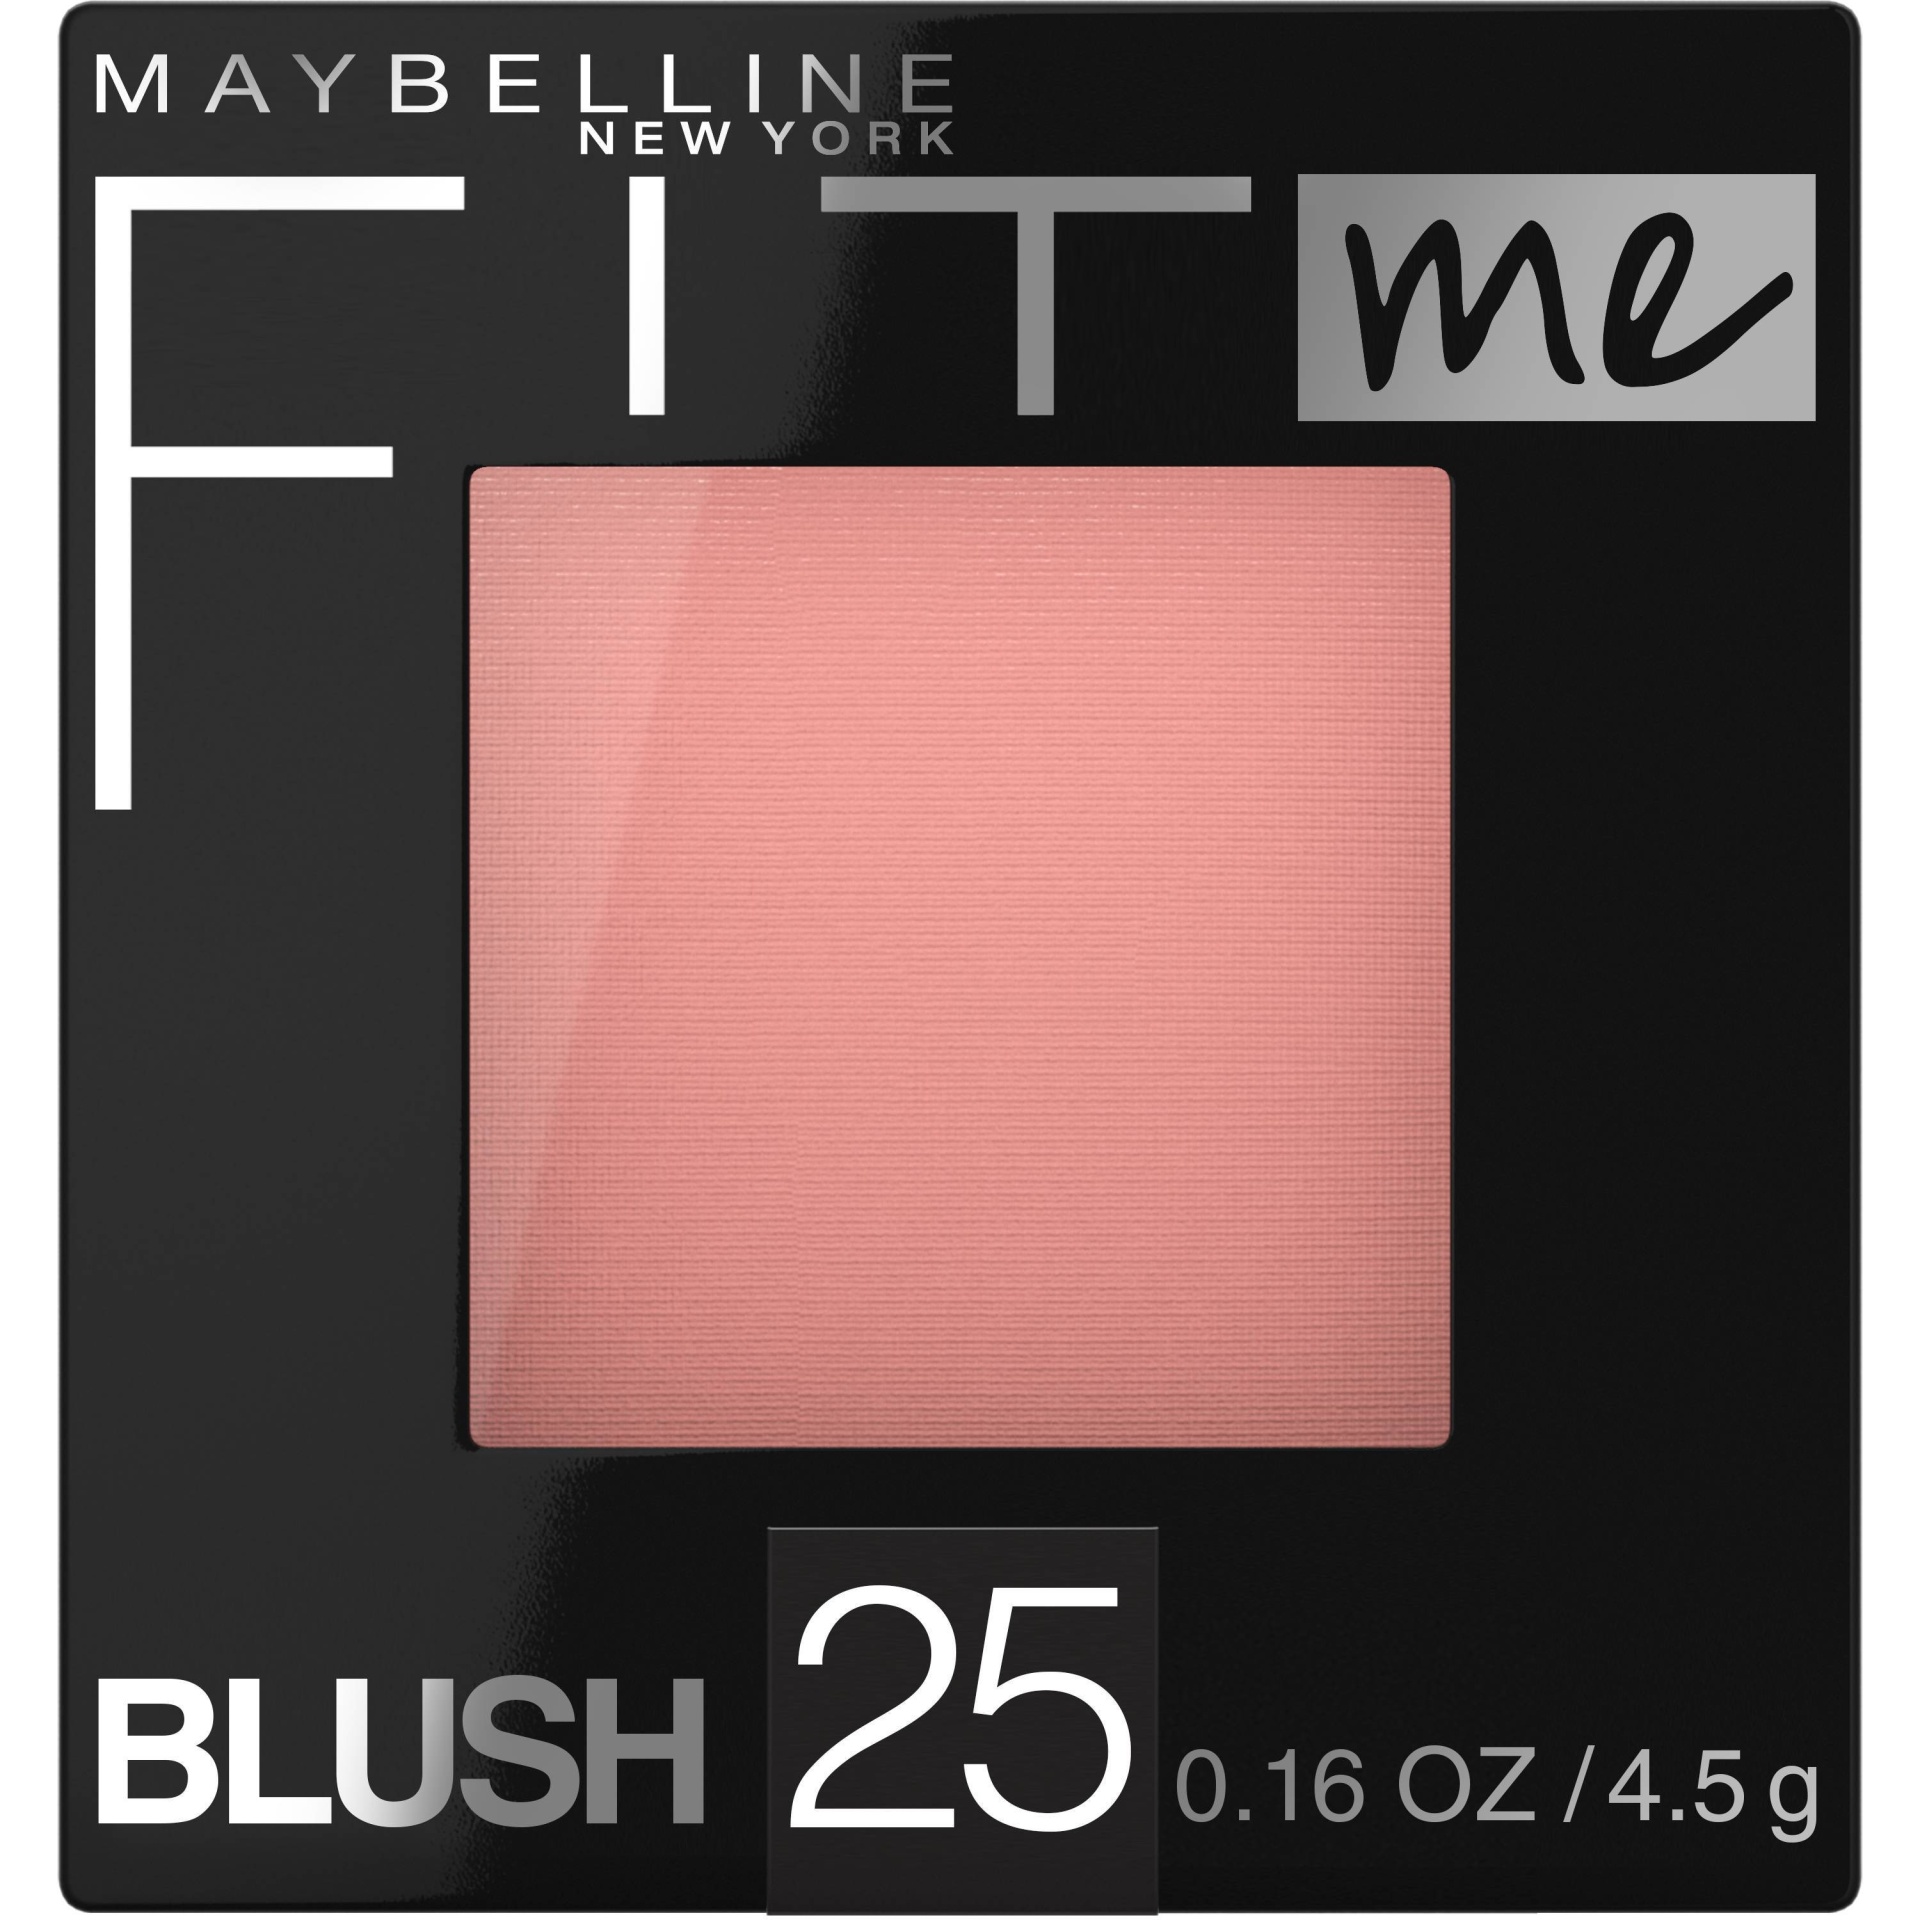 Maybelline Fitme Blush - 25 Pink - 0.16oz : Target